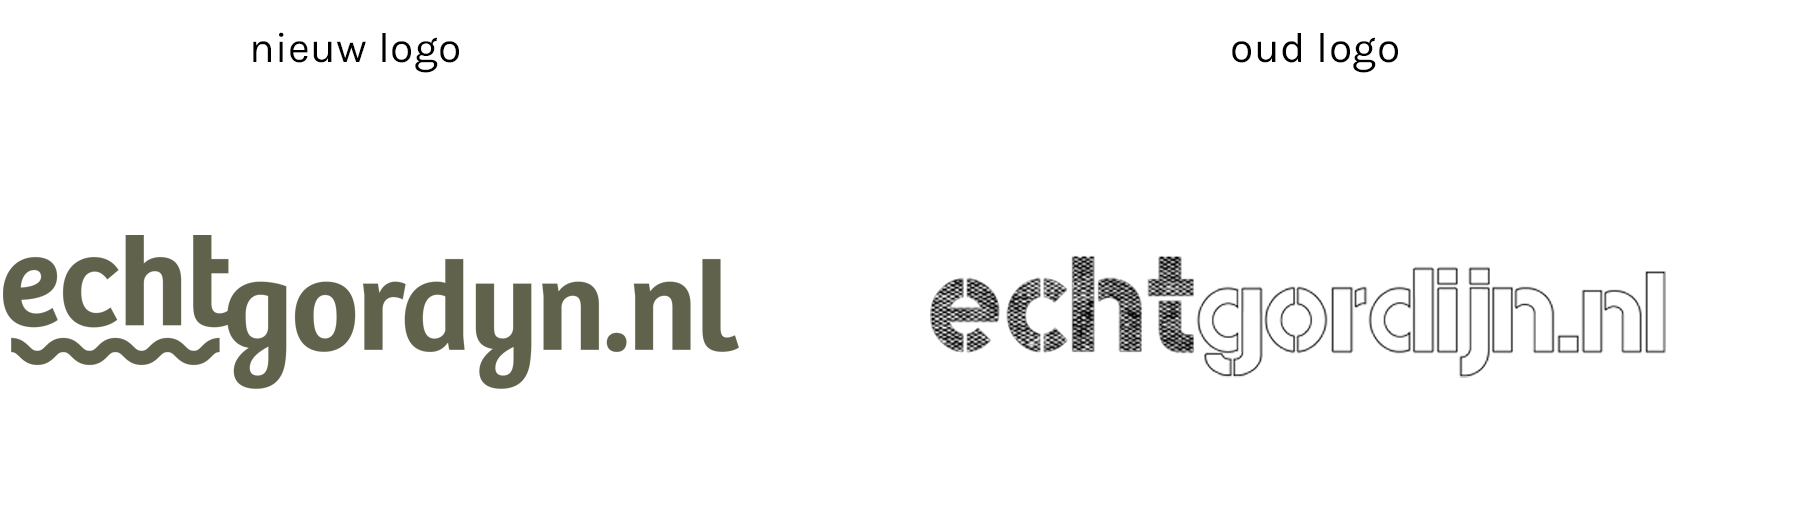 Echtgordijn logo restyling